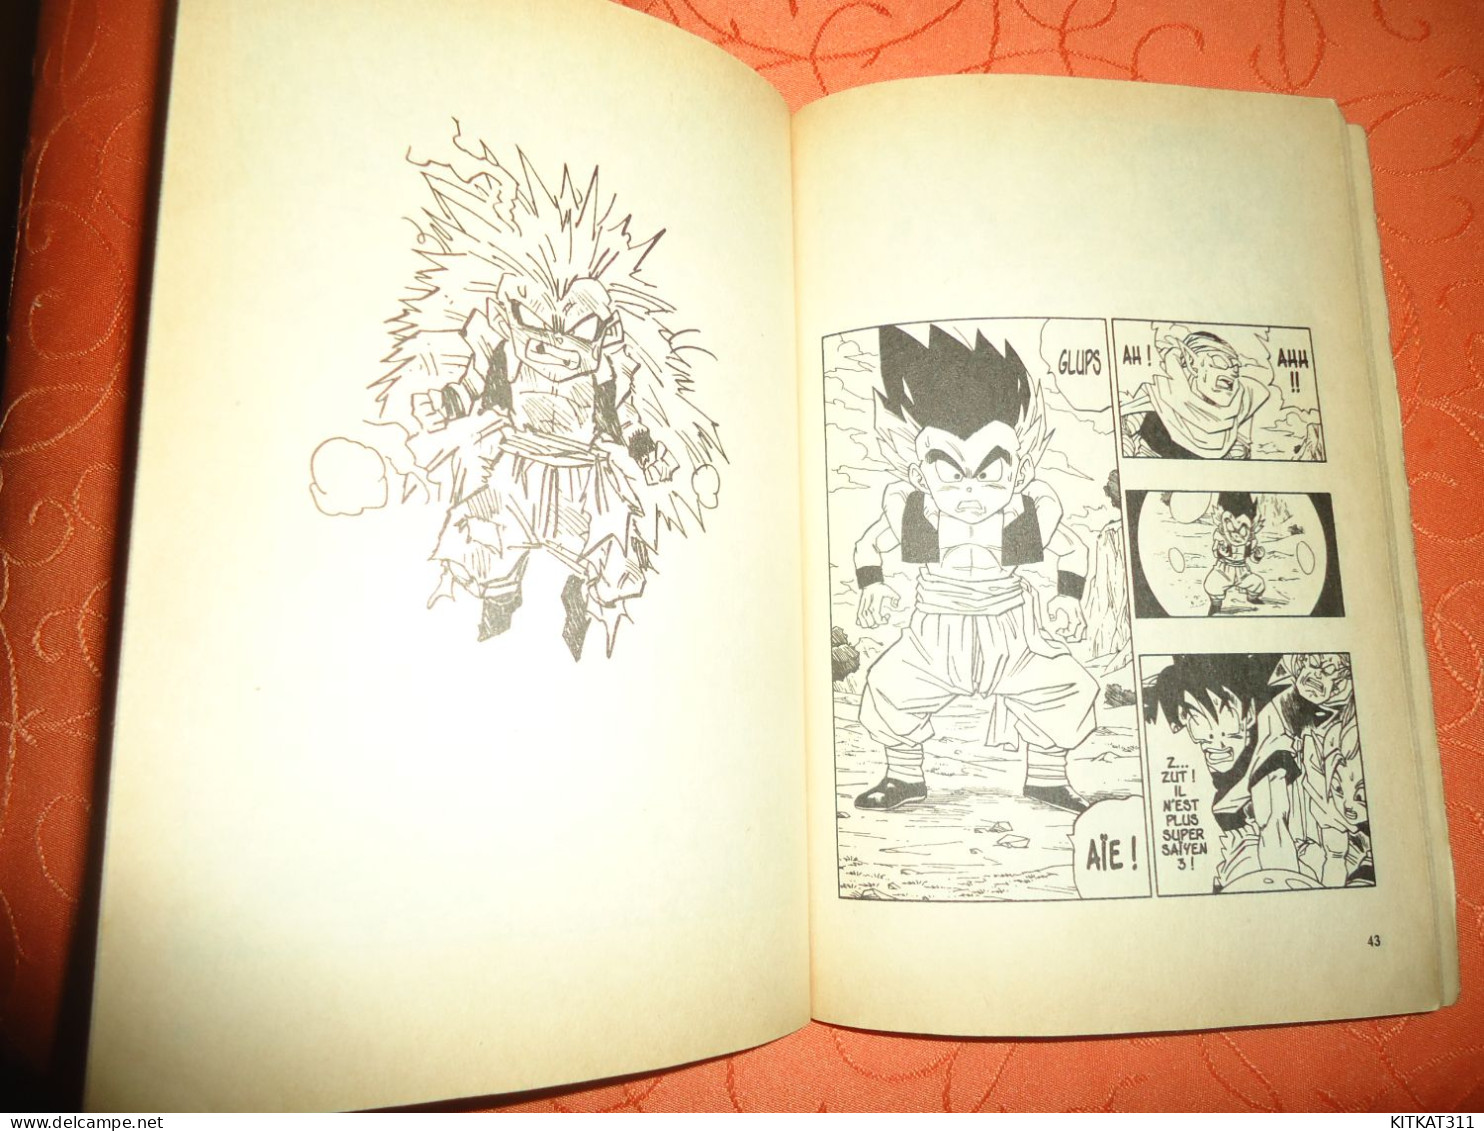 Mensuel N°82 DRAGON BALL -AKIRA TORIYAMA-SEPT 1999-édition Francaise-GLENAT - Mangas [french Edition]